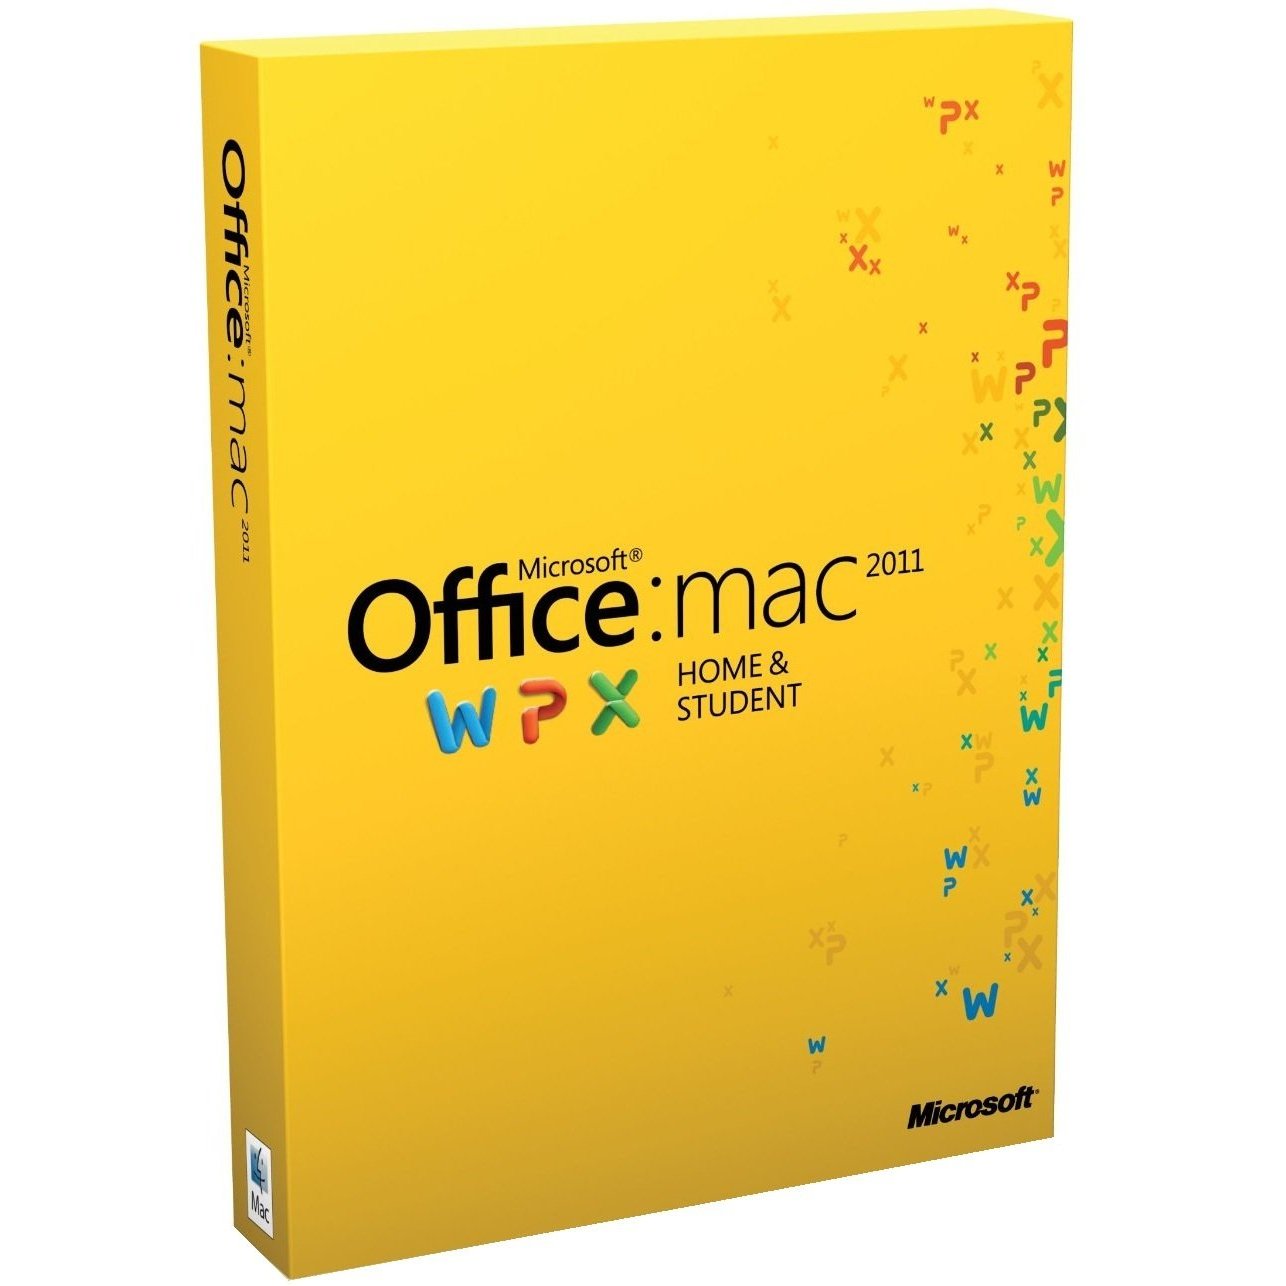 product keys for microsoft office 2011 mac